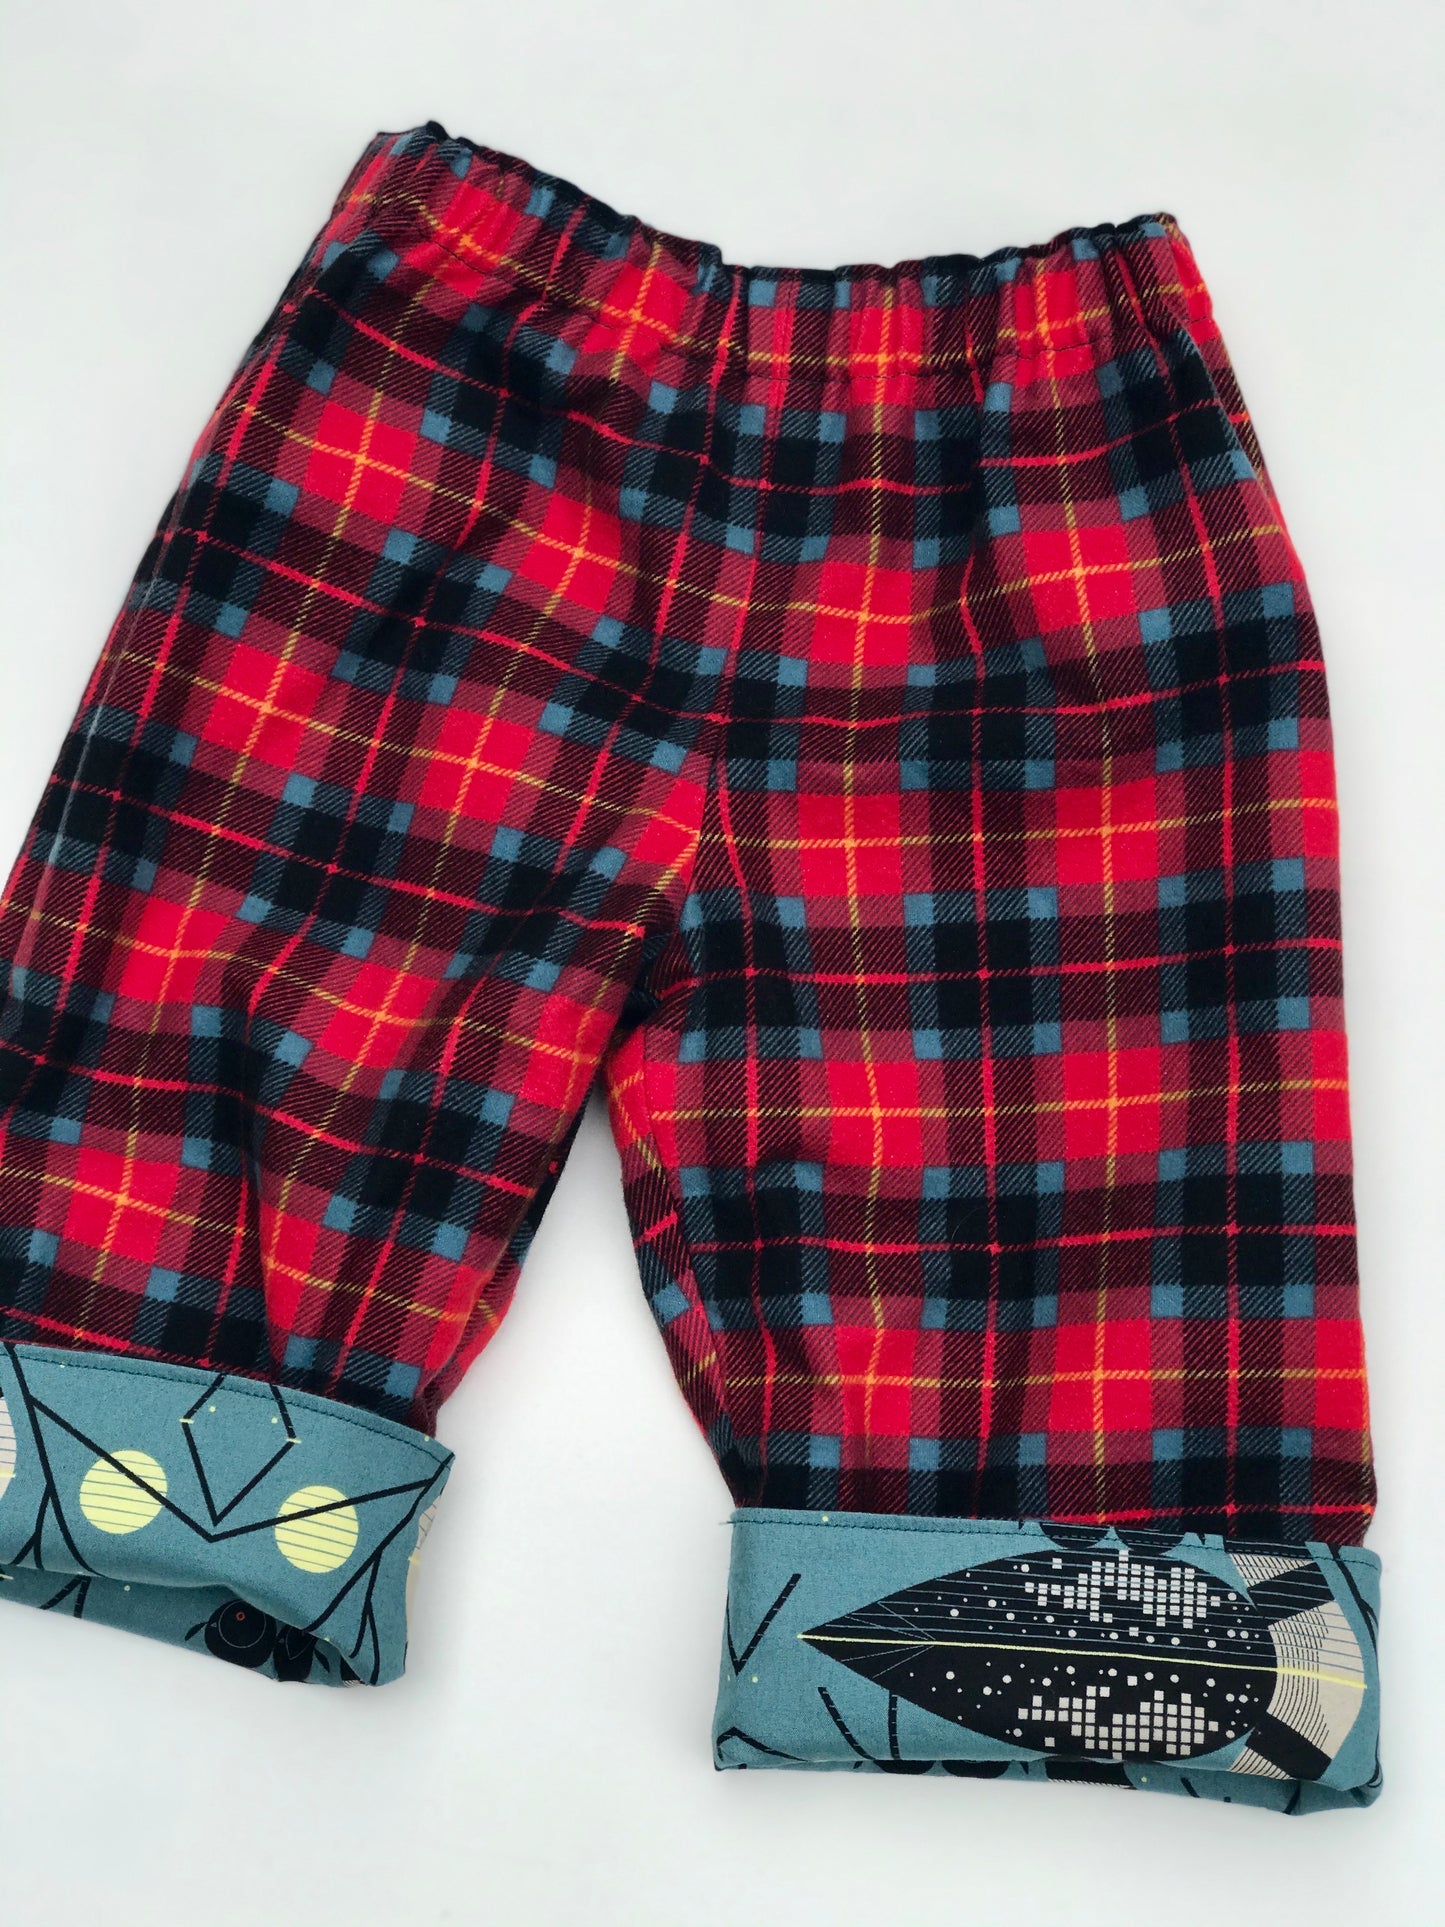 flannel reversible pants in Charley Harper loons - little girl Pearl